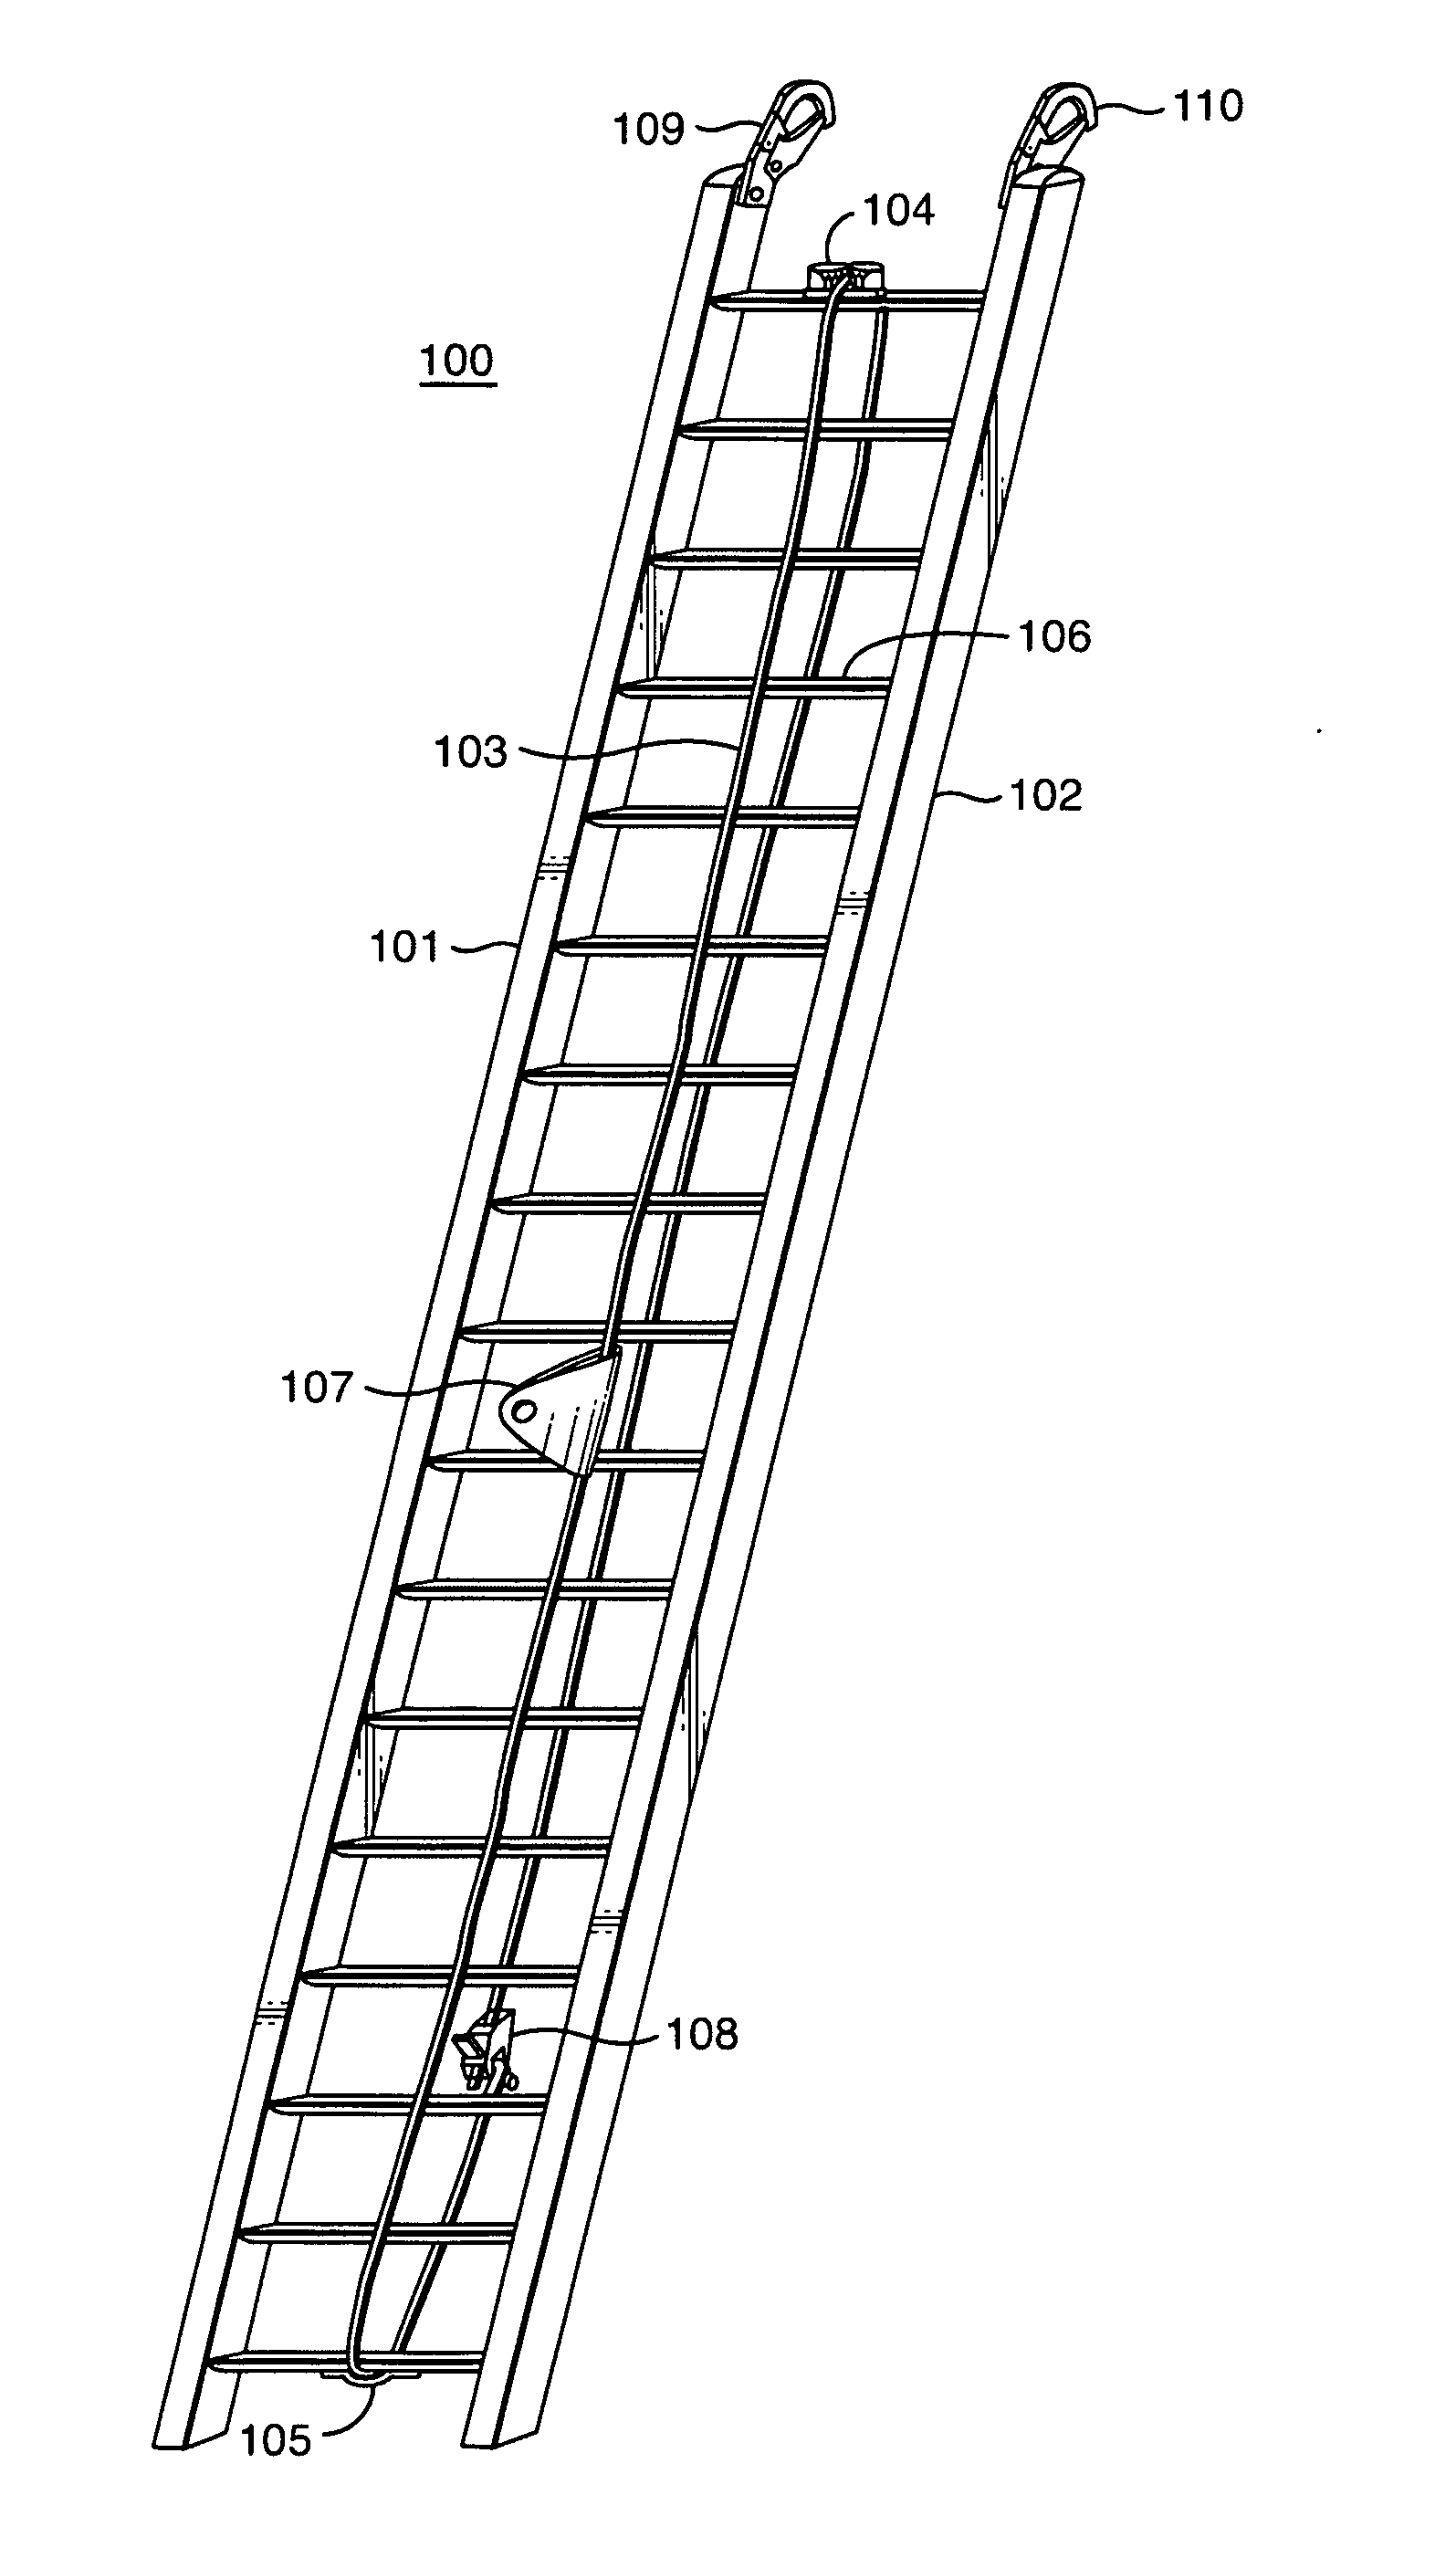 Fall-arrest ladder system